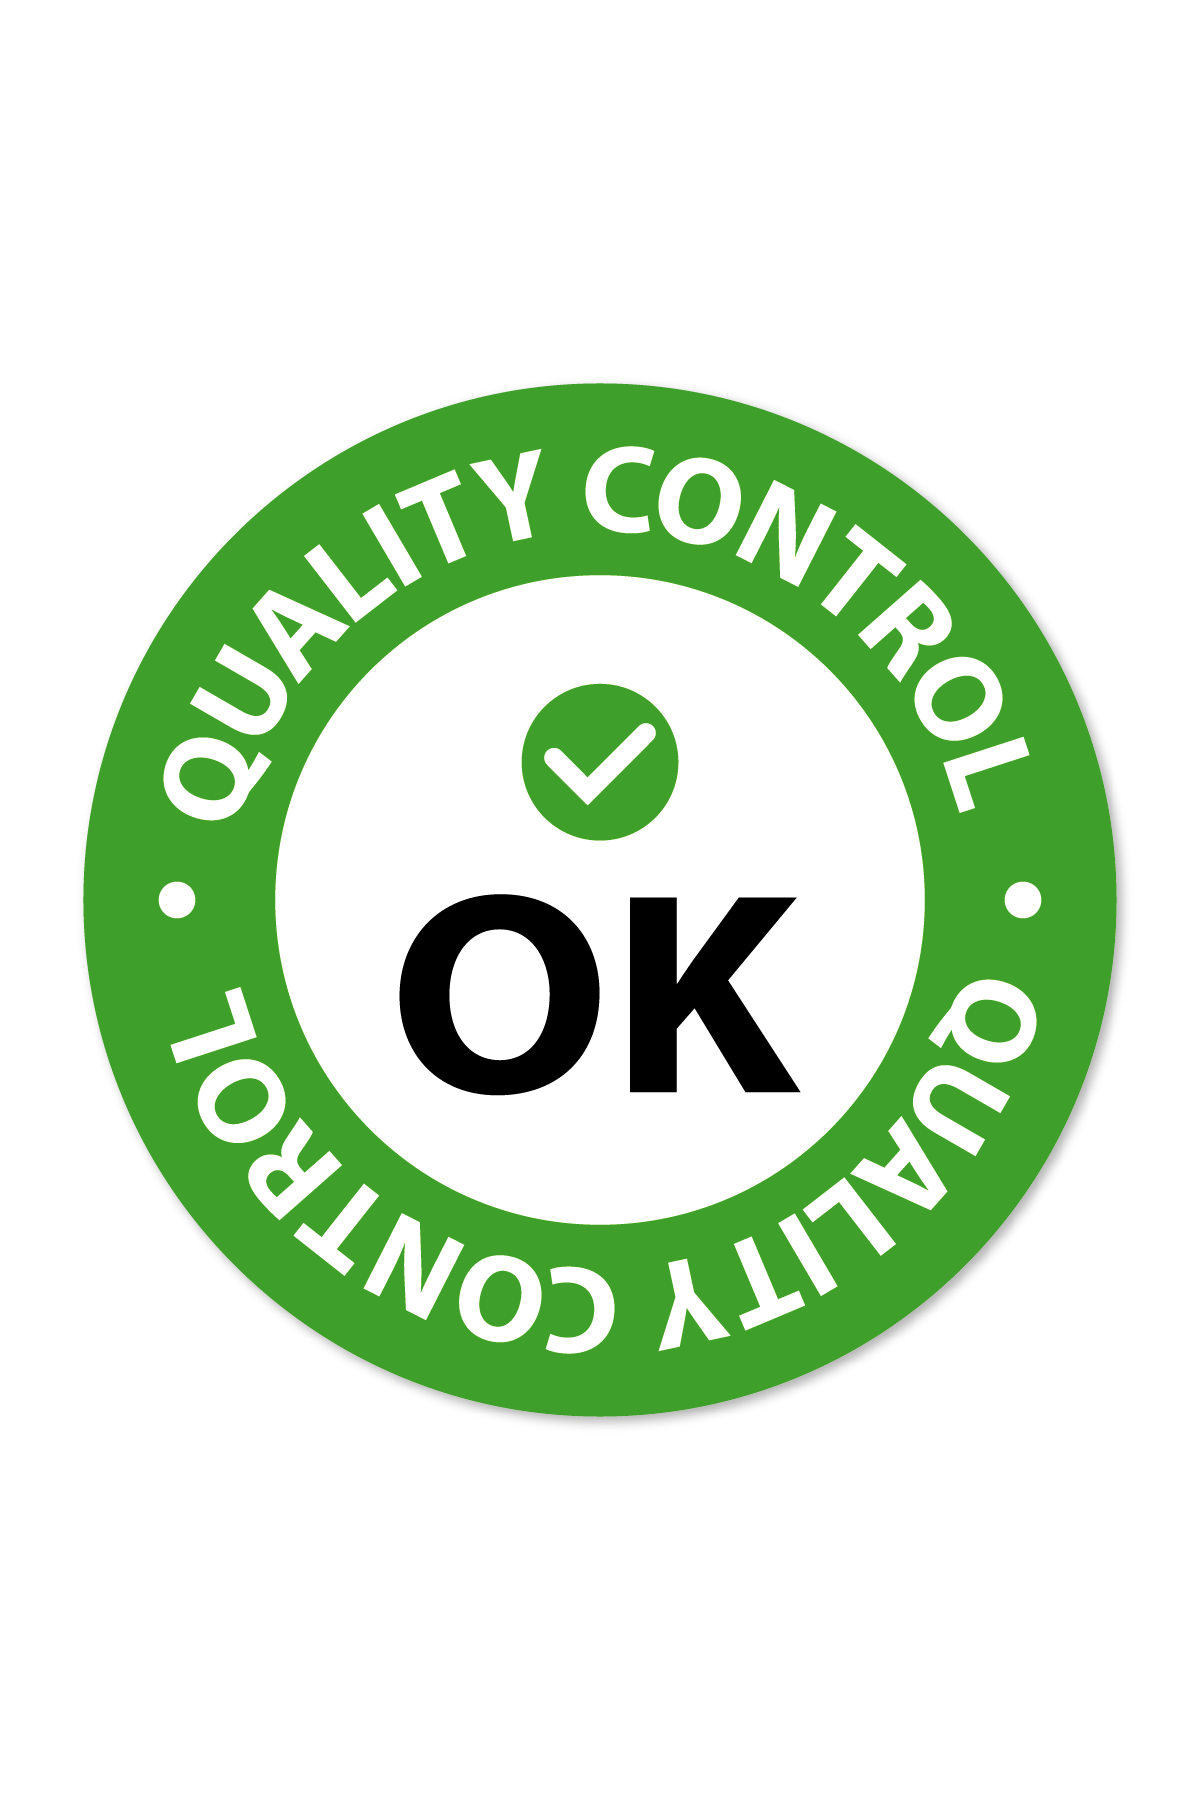 Kontrol sticker etiketi - quality control 1 plakada 100 etiket vardır.